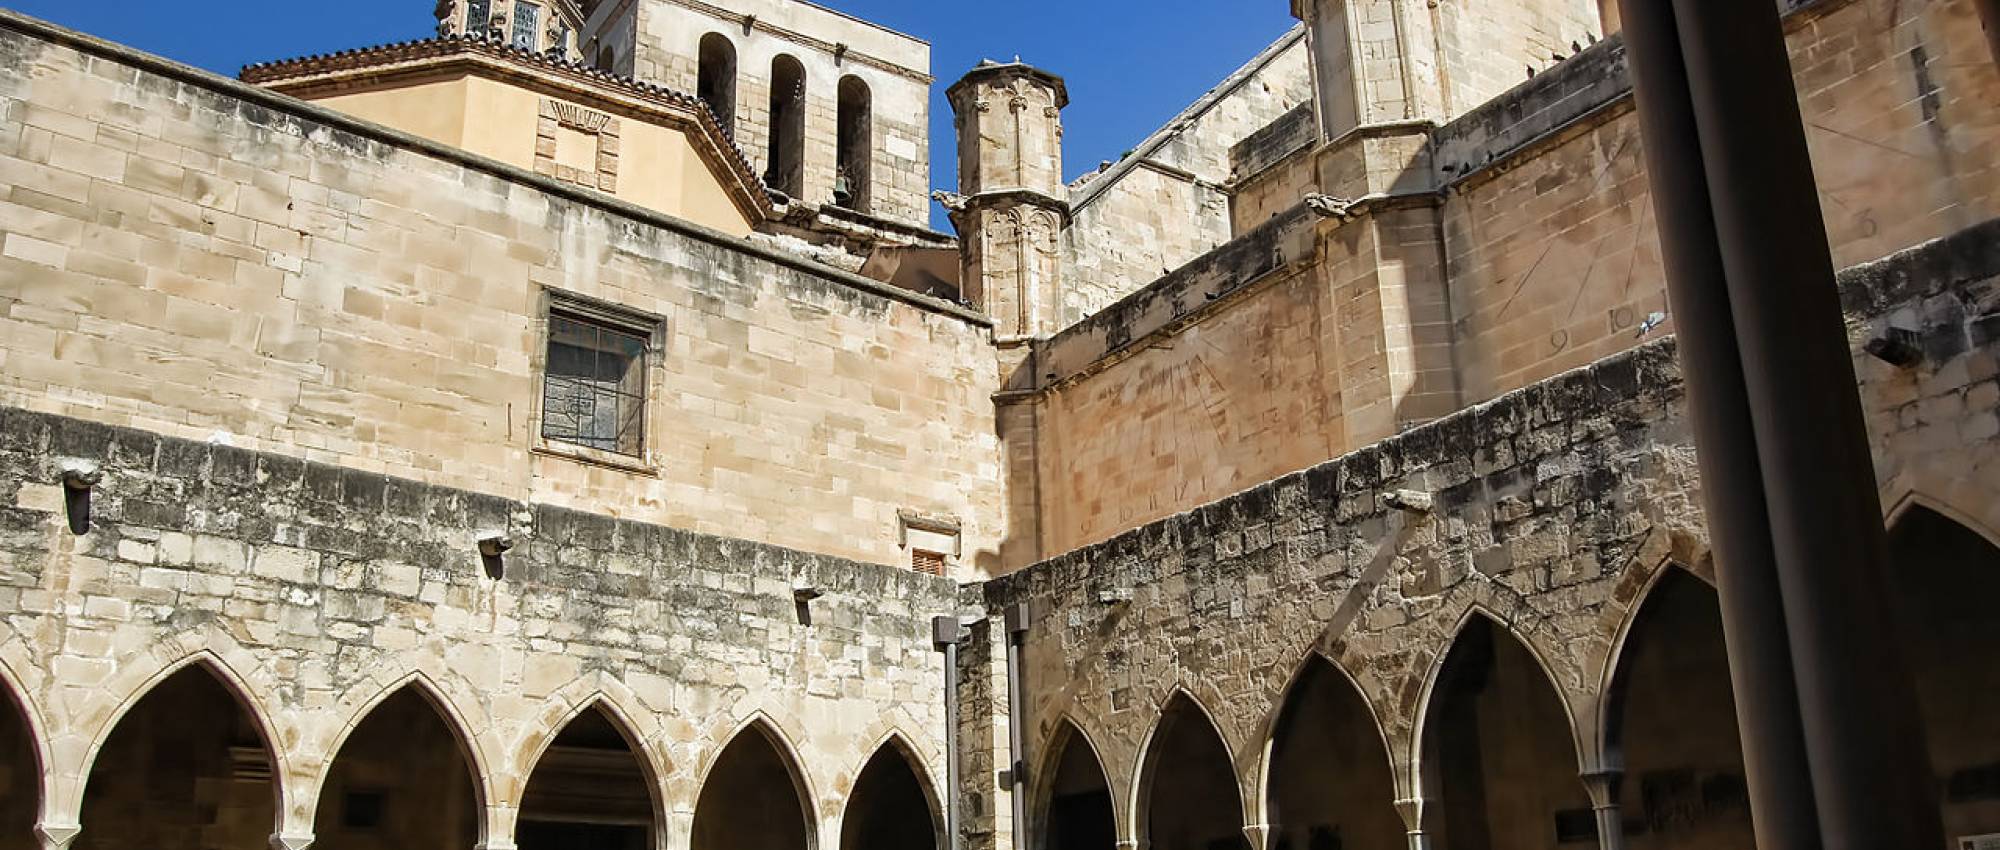 The cloister of the Cathedral of Santa Maria de Tortosa. Carme Ribes Moreno / Wikimedia Commons. CC BY-SA 3.0